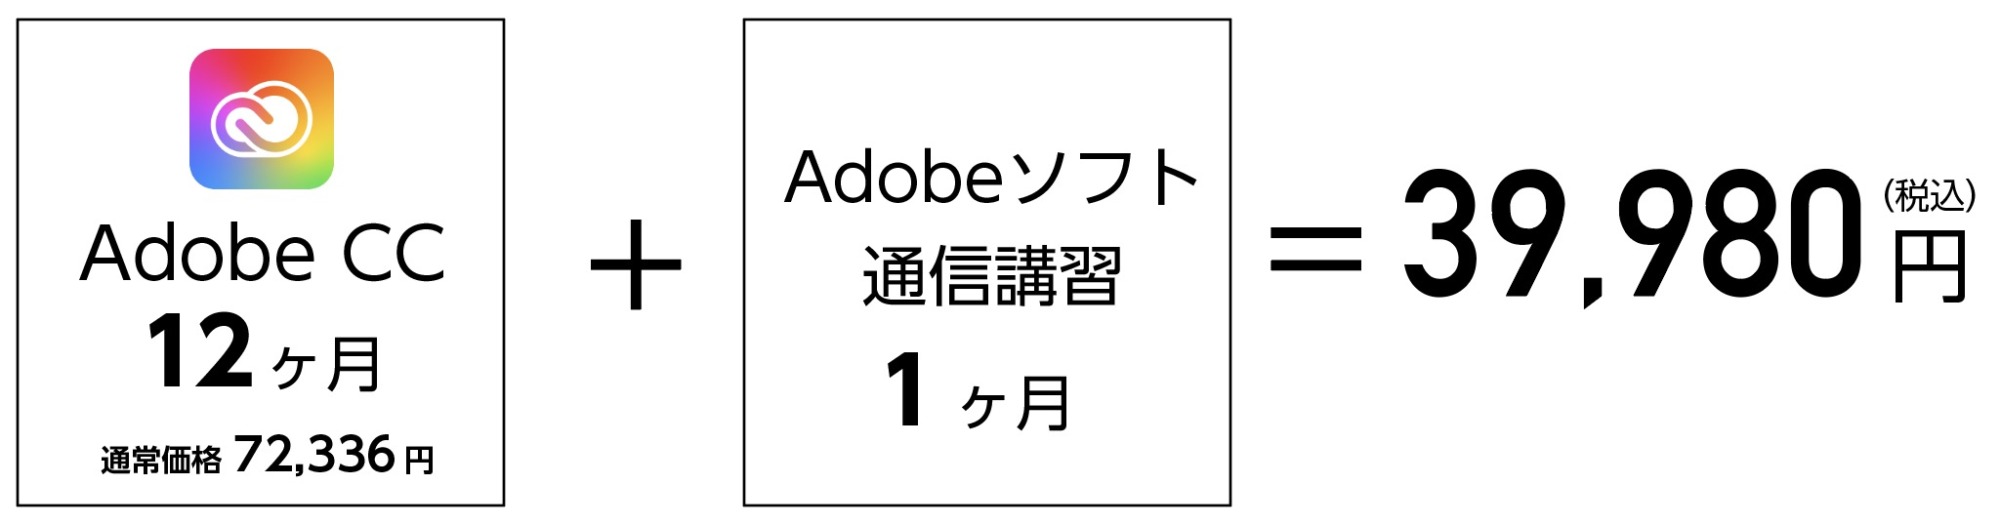 Adobe Creative Cloud を安く購入する方法